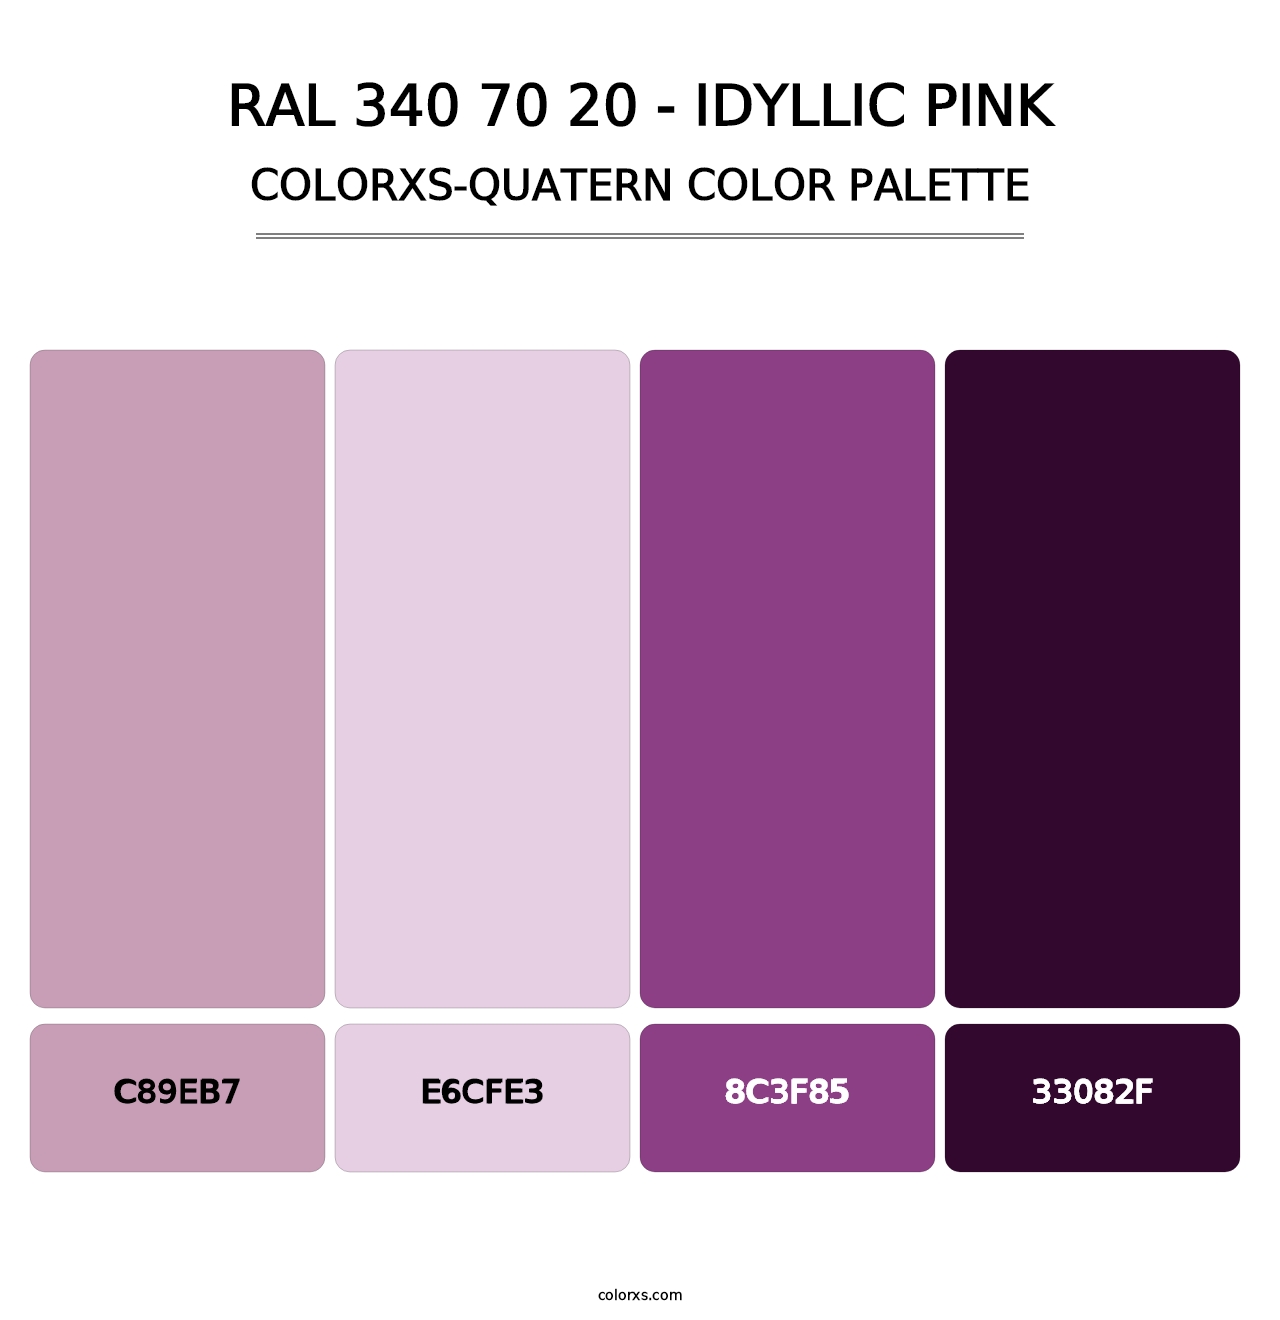 RAL 340 70 20 - Idyllic Pink - Colorxs Quatern Palette